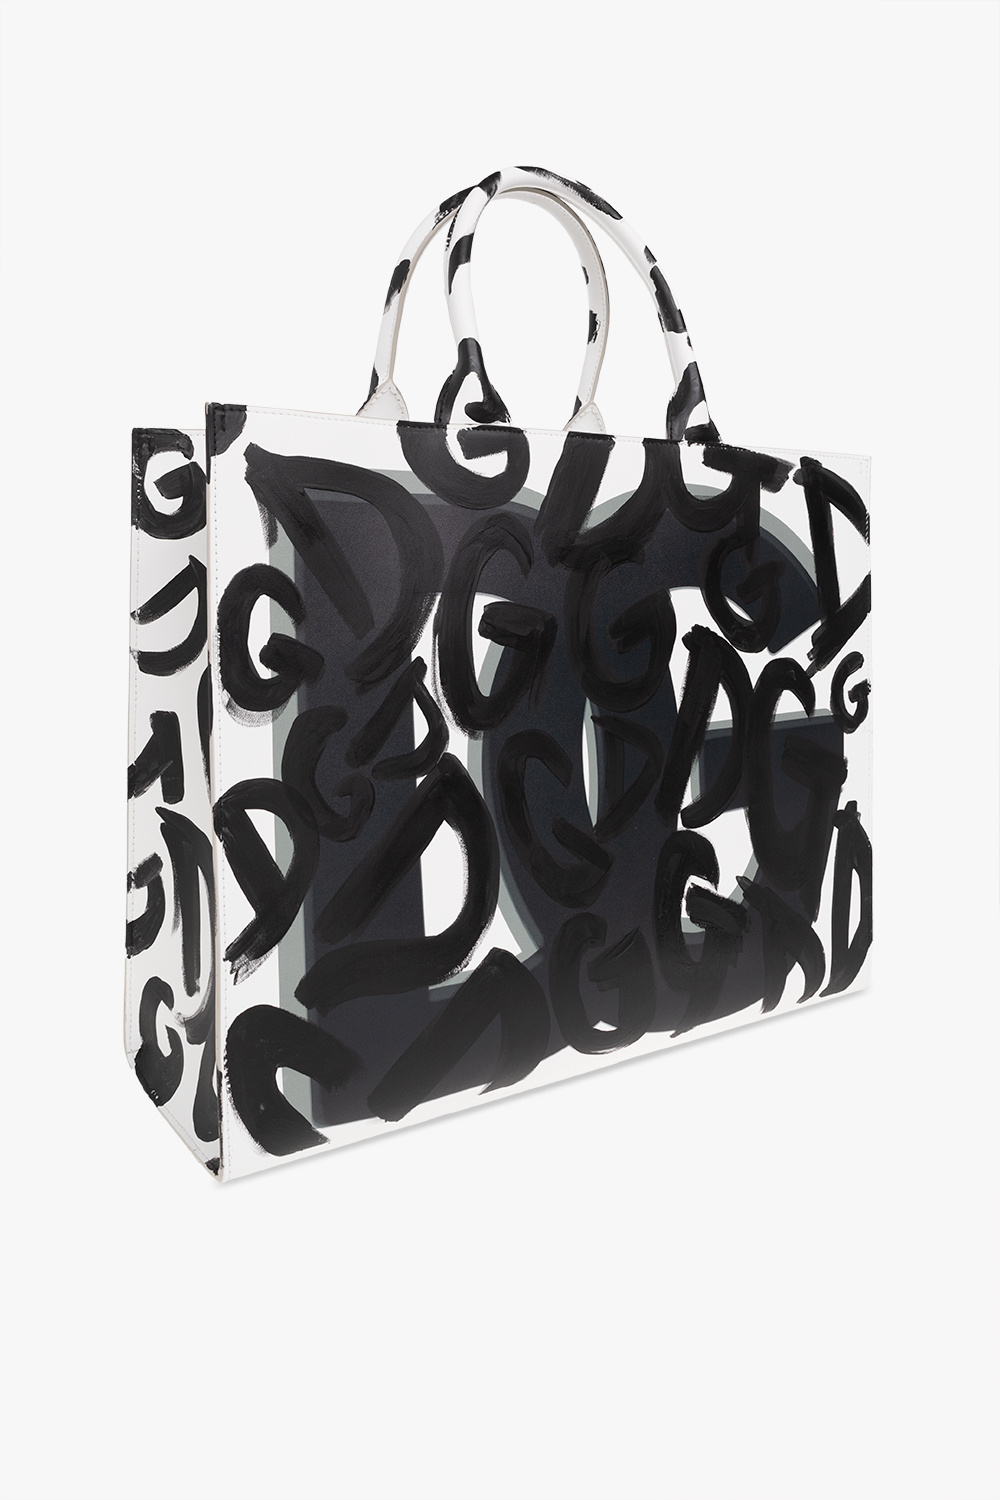 Dolce & Gabbana ‘DG Daily Large’ rubber bag